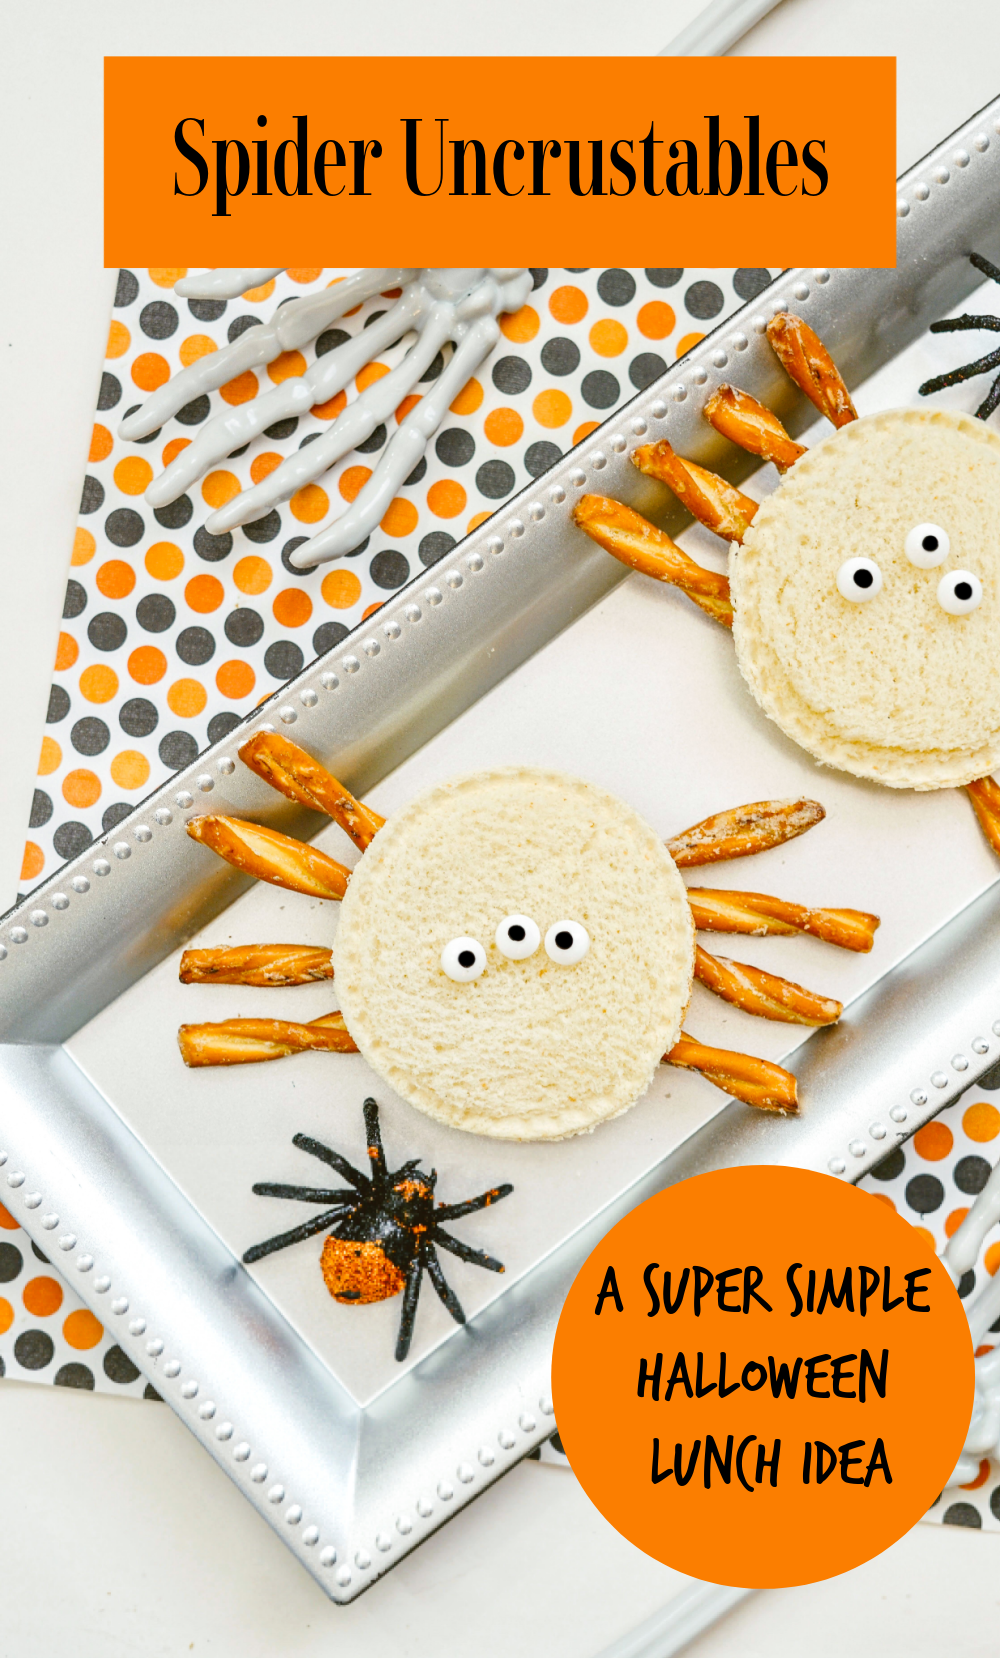 Spider Uncrustables: A Super Simple Halloween Lunch Idea